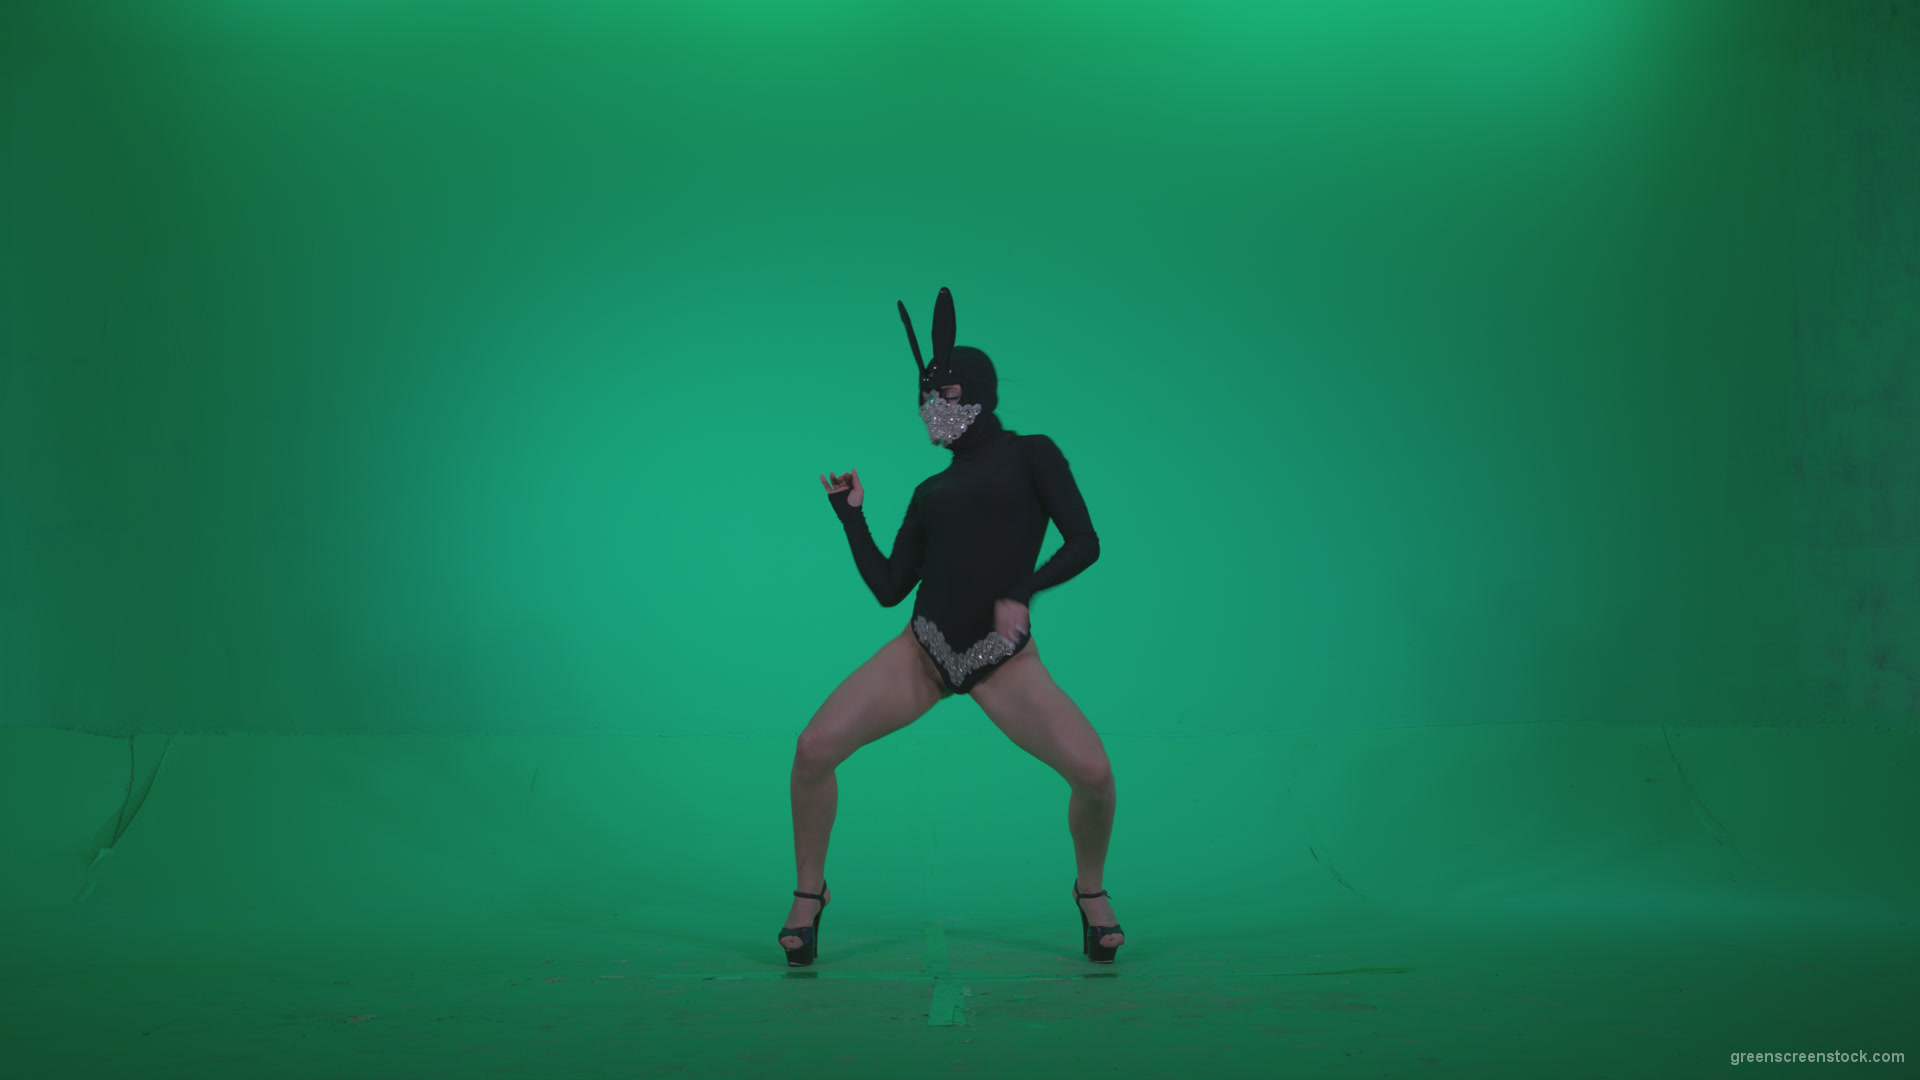 Go-go-Dancer-Black-Rabbit-u8-Green-Screen-Video-Footage_004 Green Screen Stock